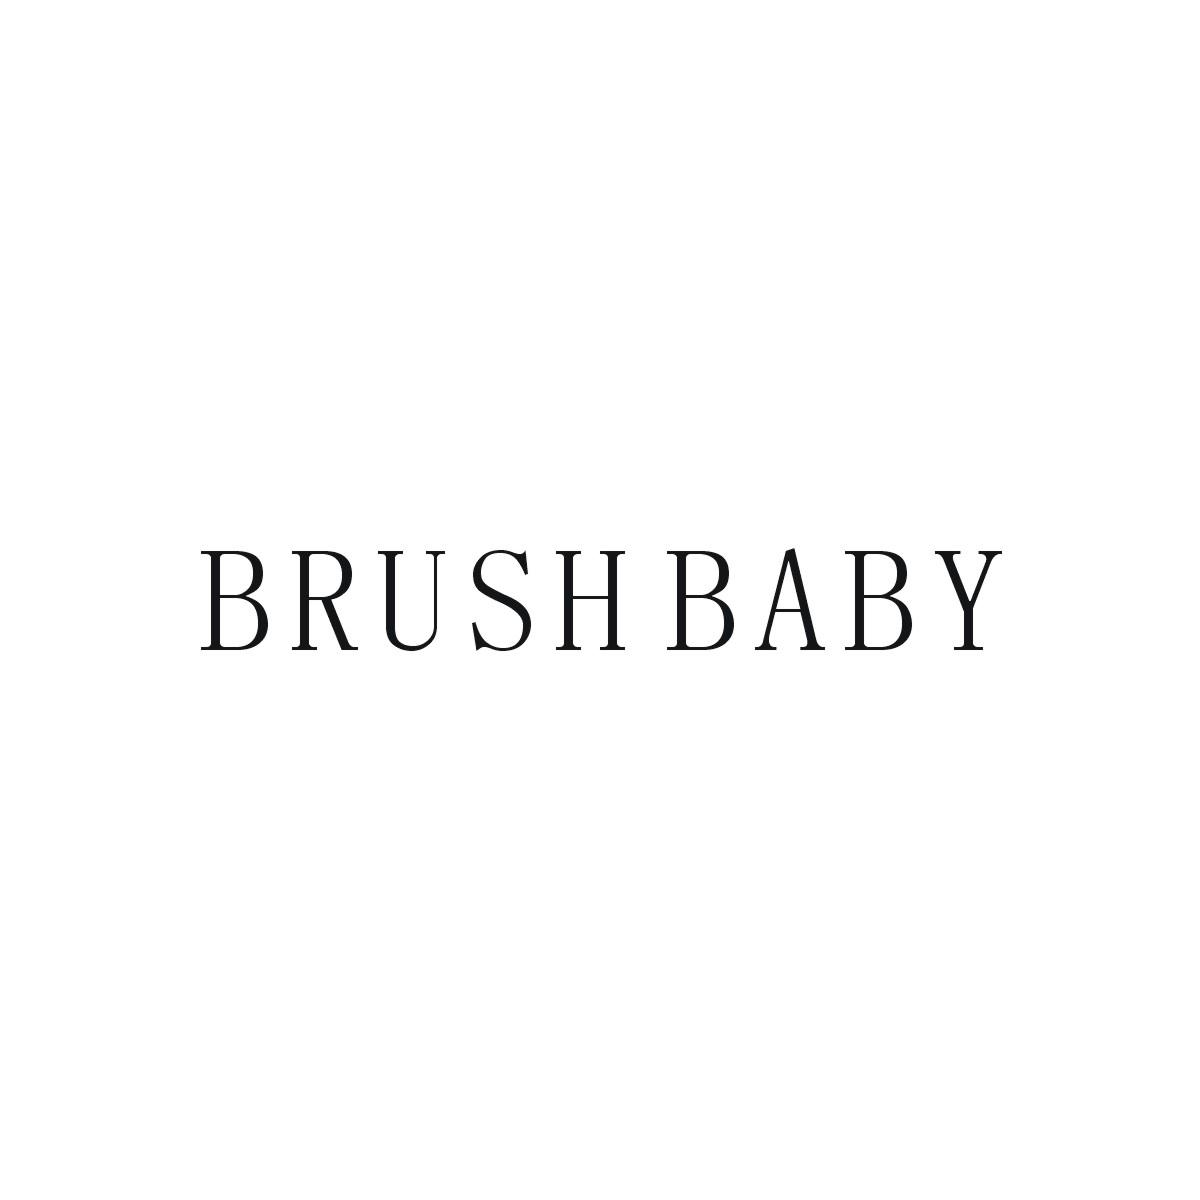 BRUSH BABY水瓶商标转让费用买卖交易流程